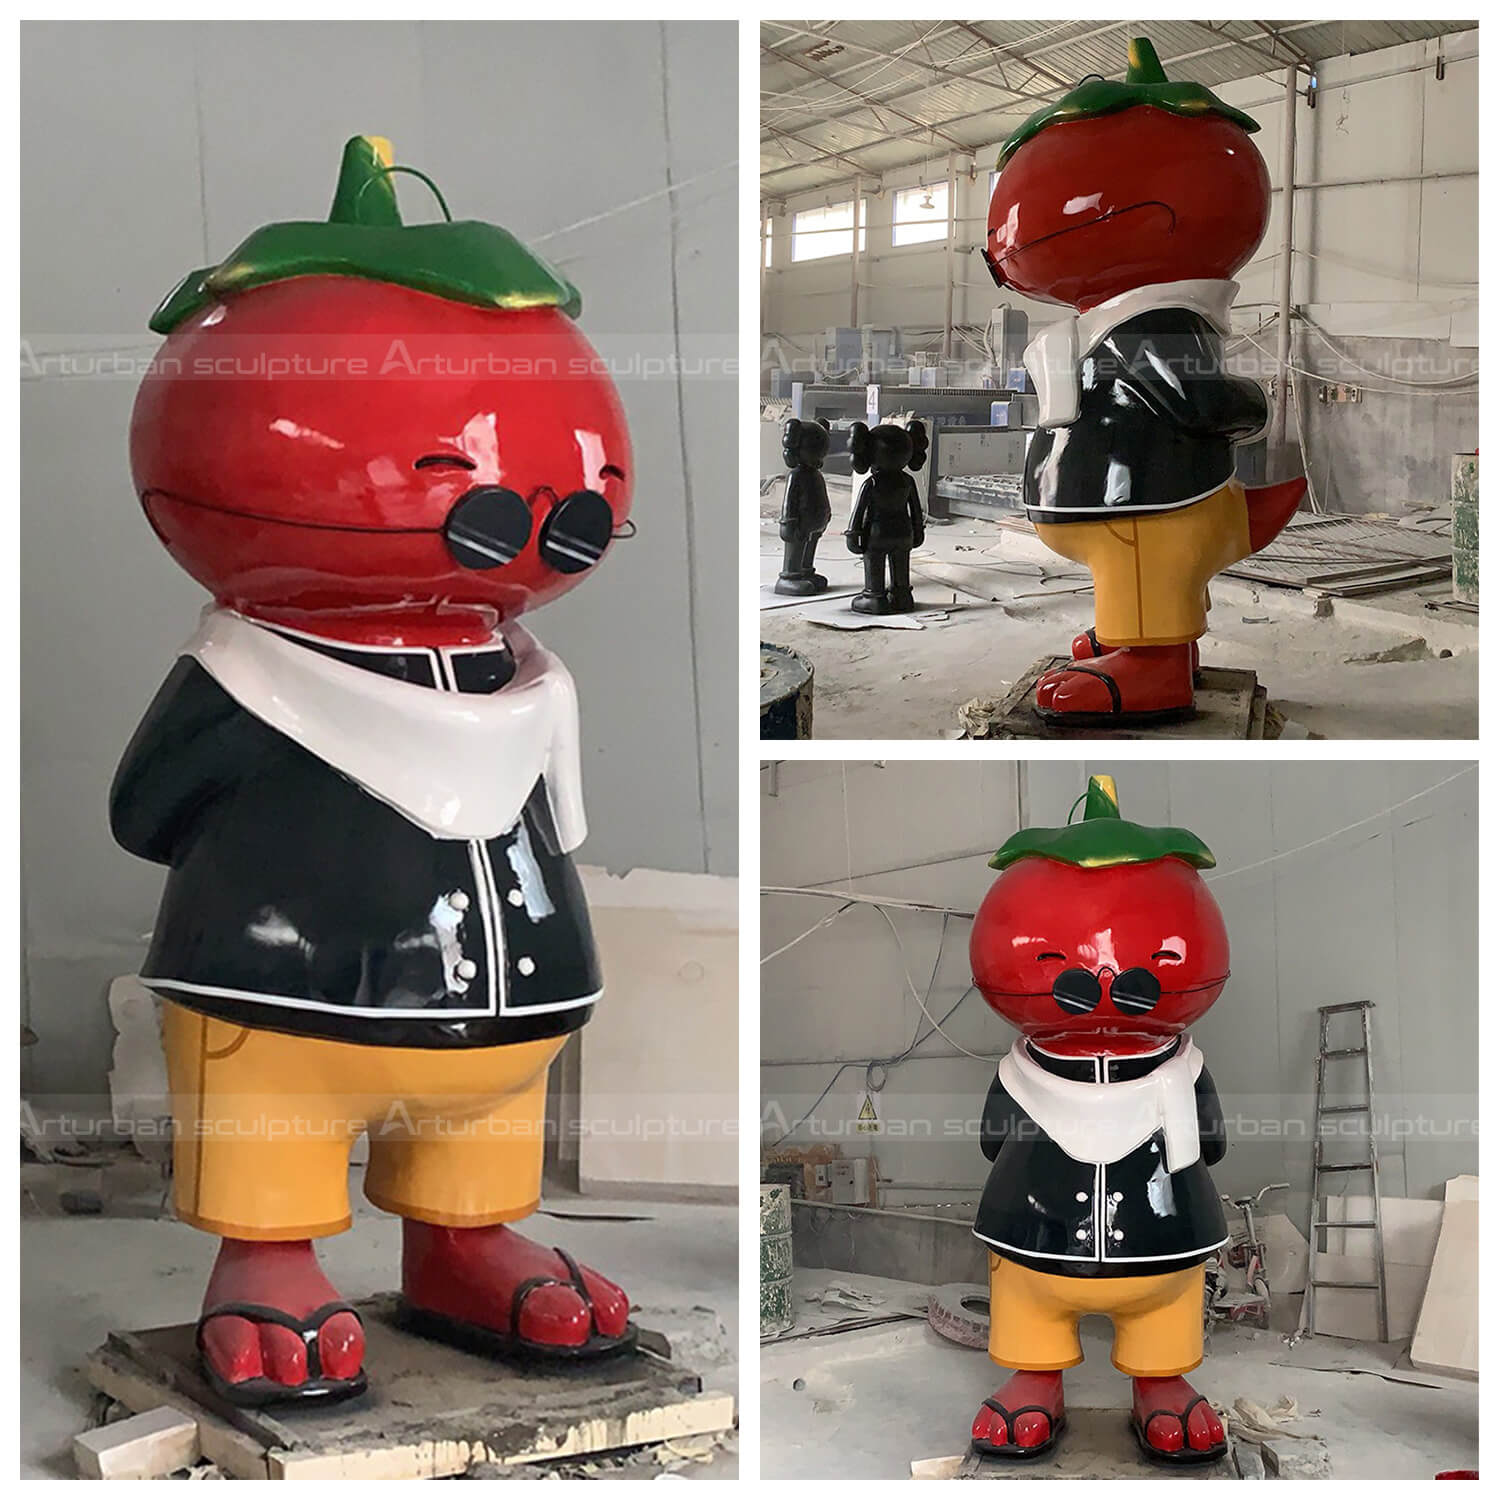 tomato sculpture